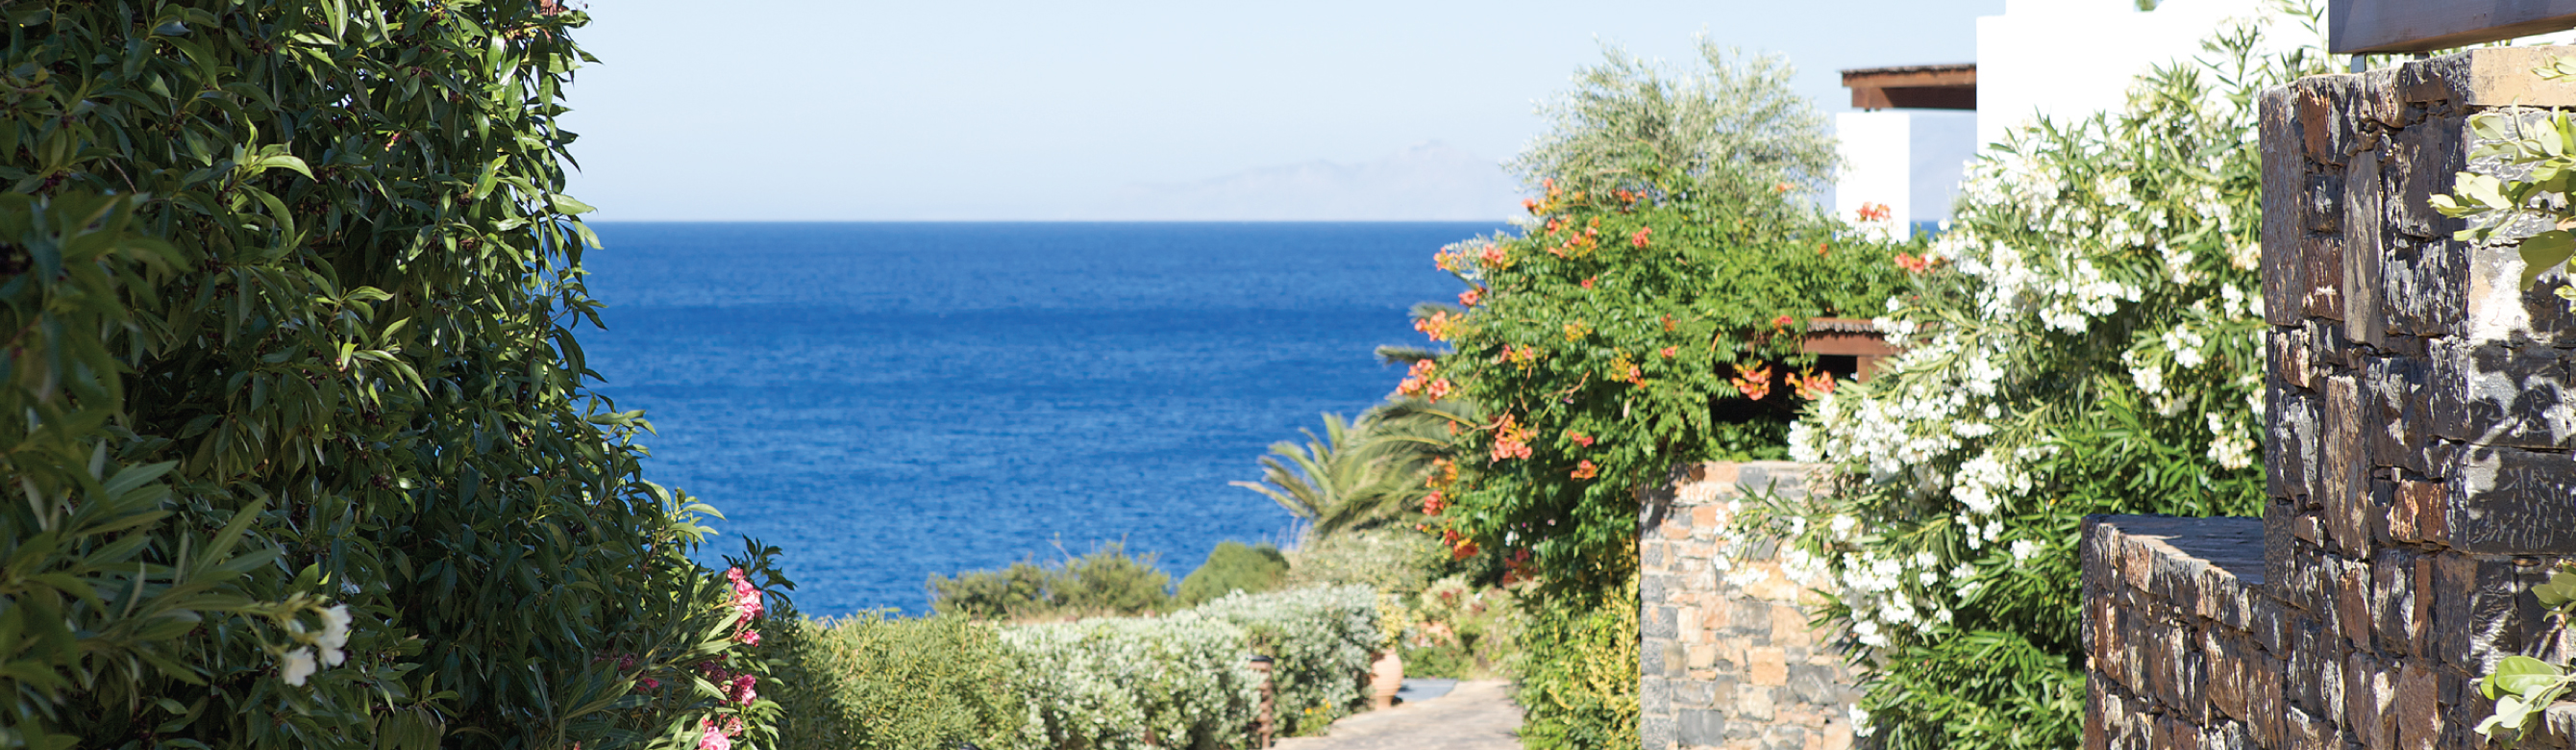 Book your wedding day in Sensimar Elounda Village Resort & Spa by Aquila Crete